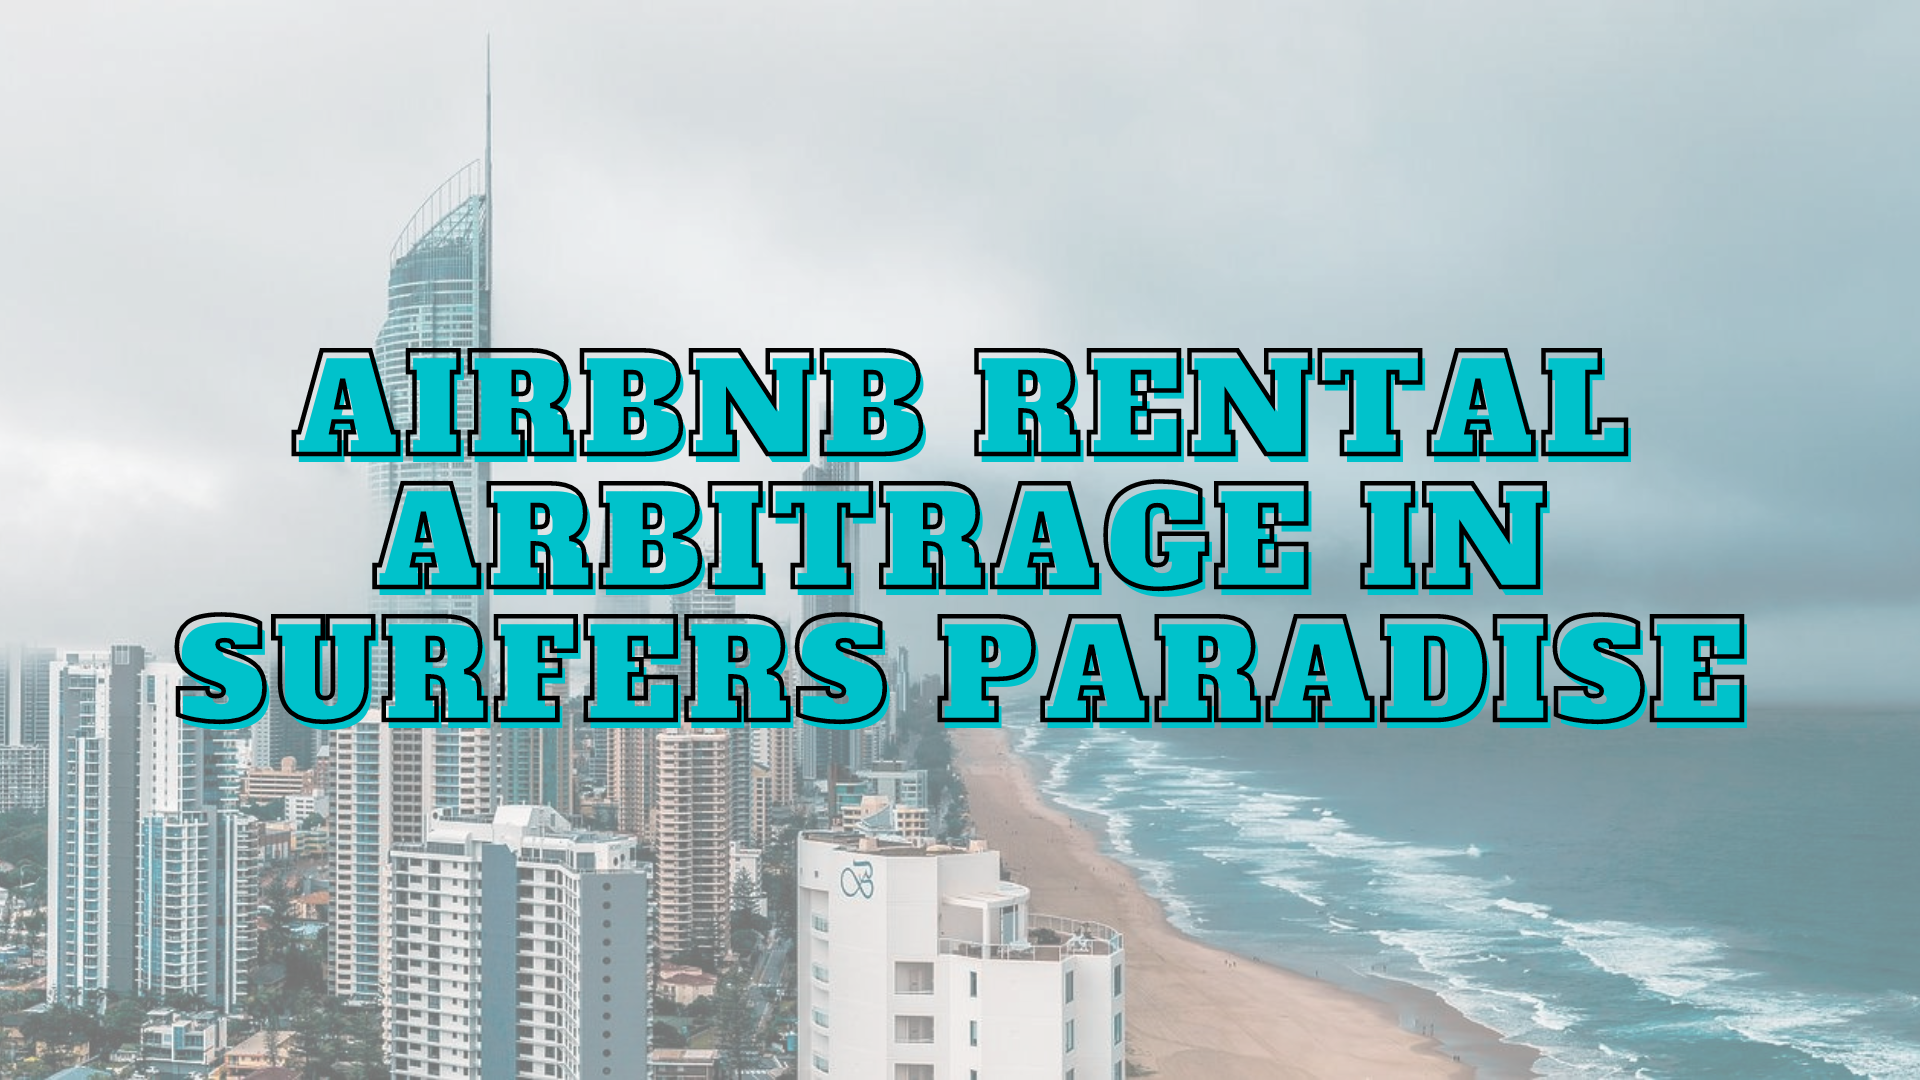 surfers paradise airbnb rental arbitrage